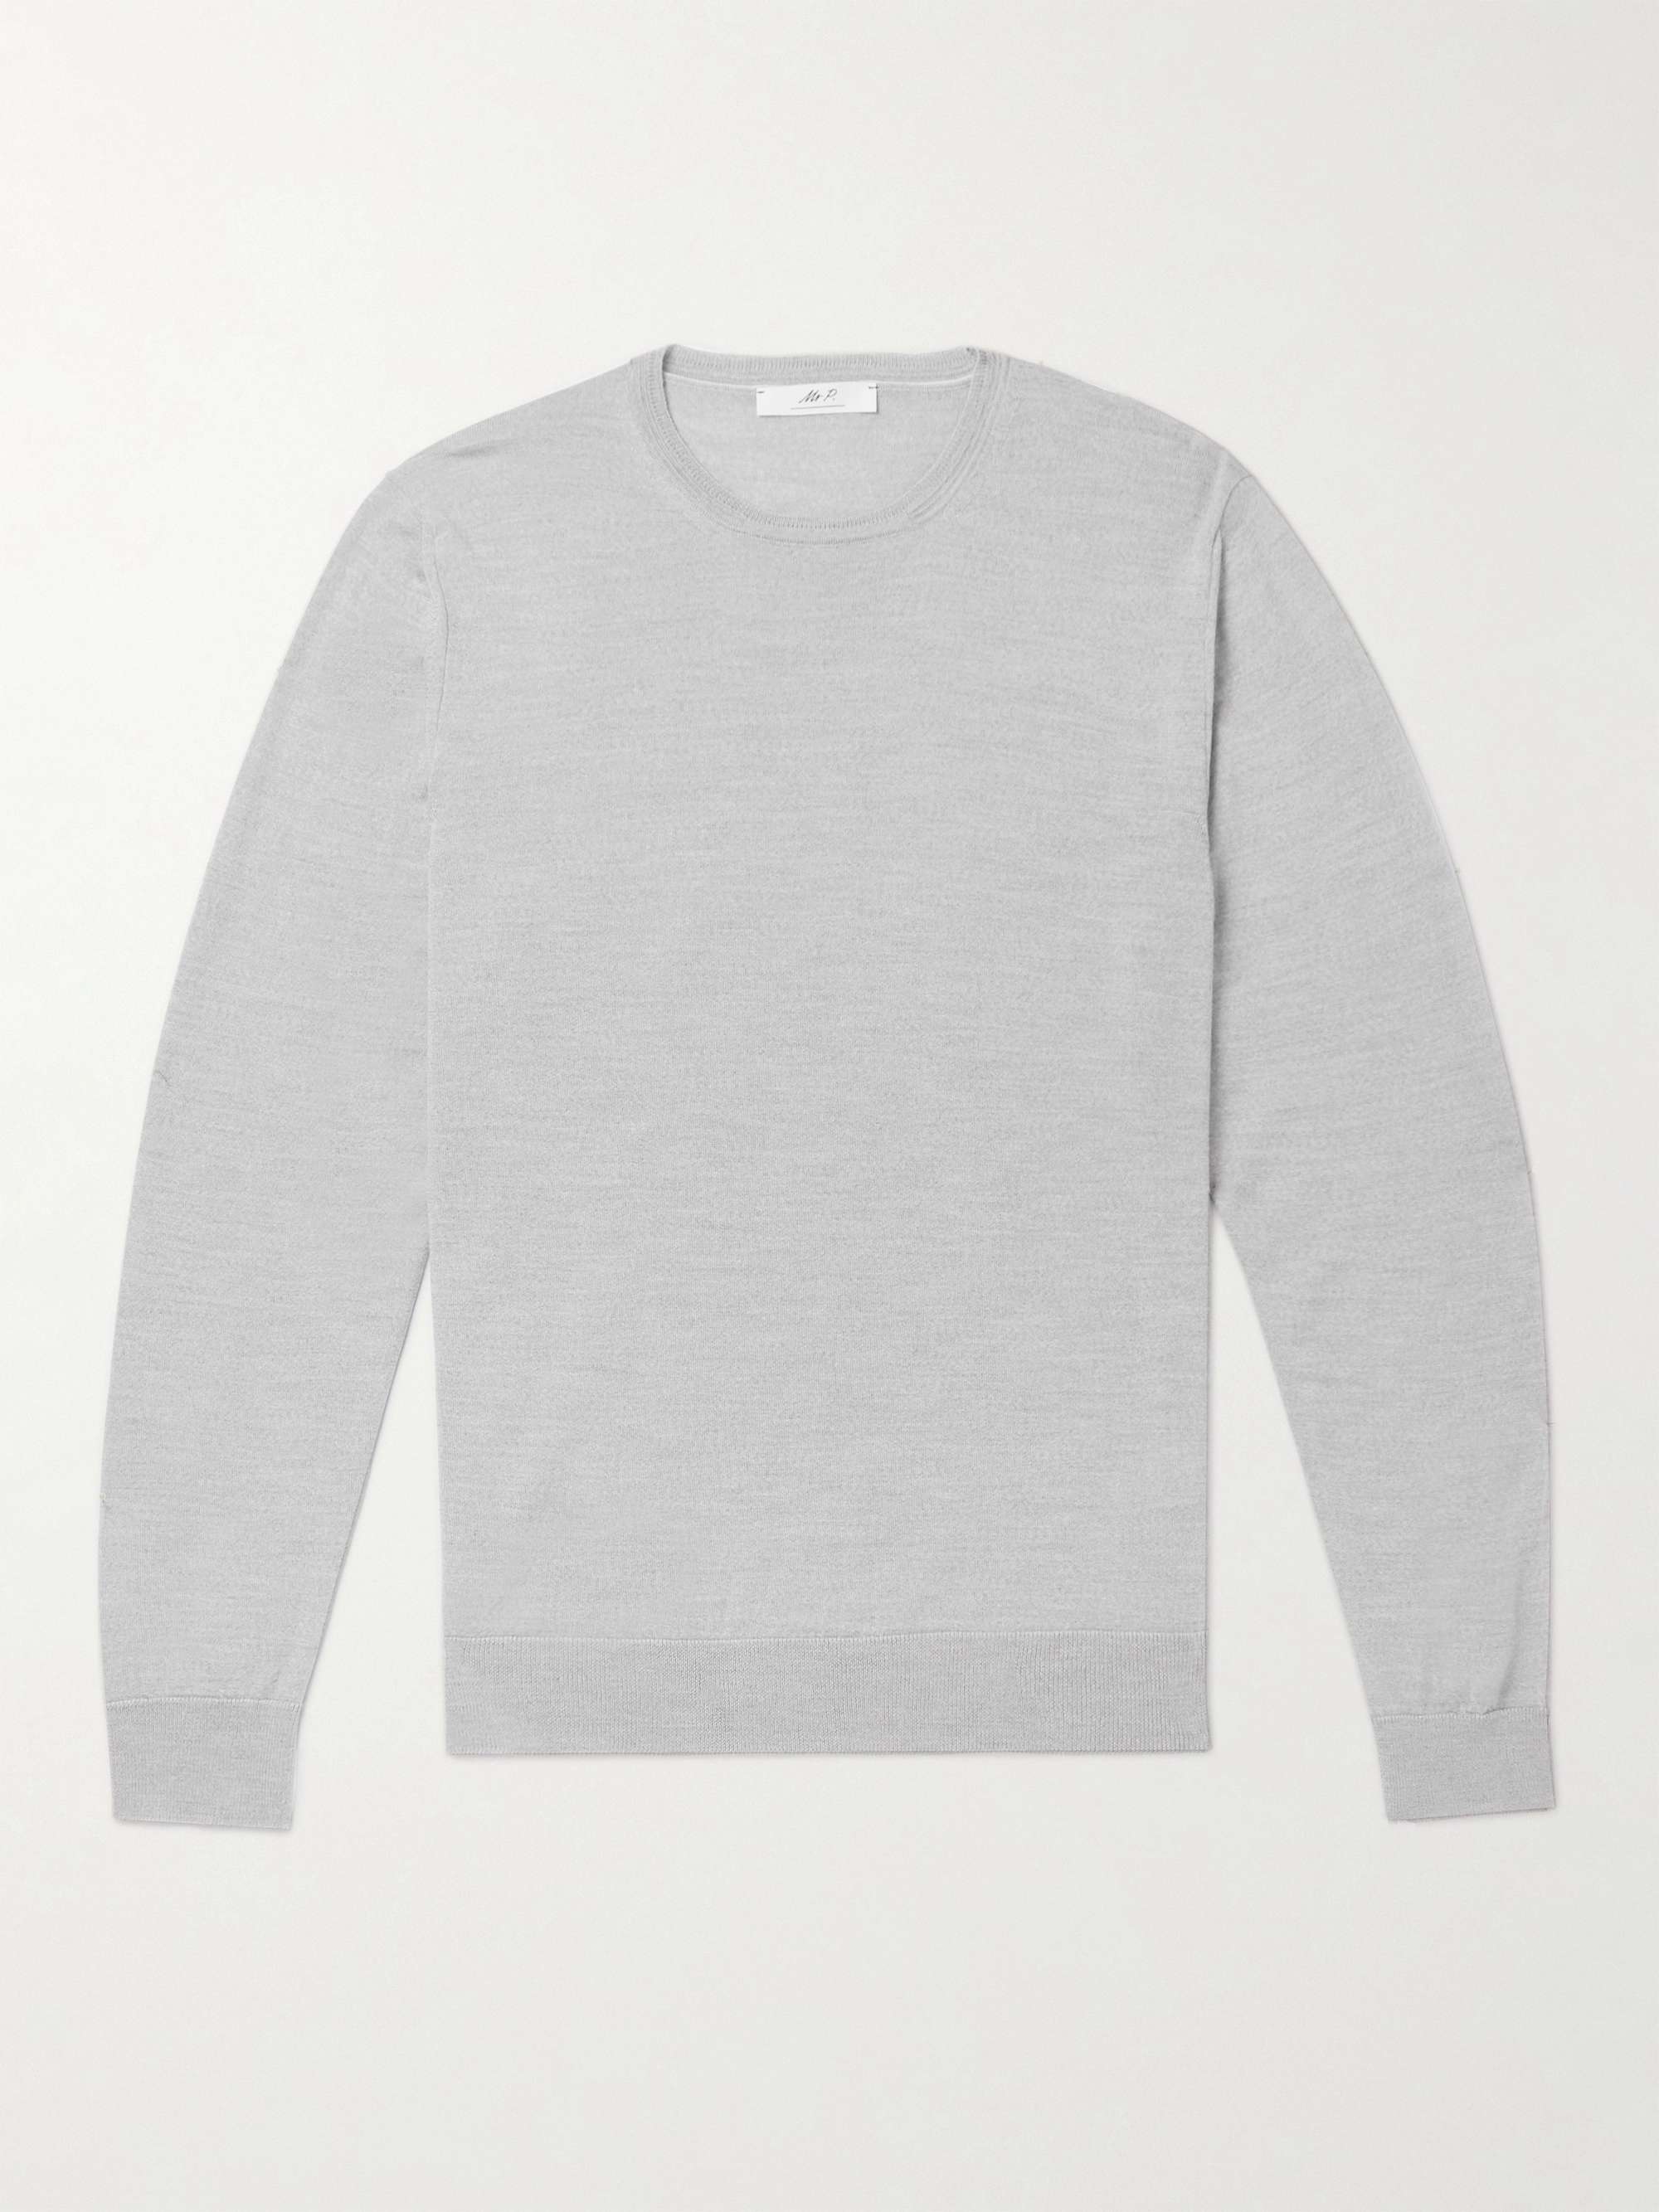 MR P. Slim-Fit Merino Wool Sweater | MR PORTER